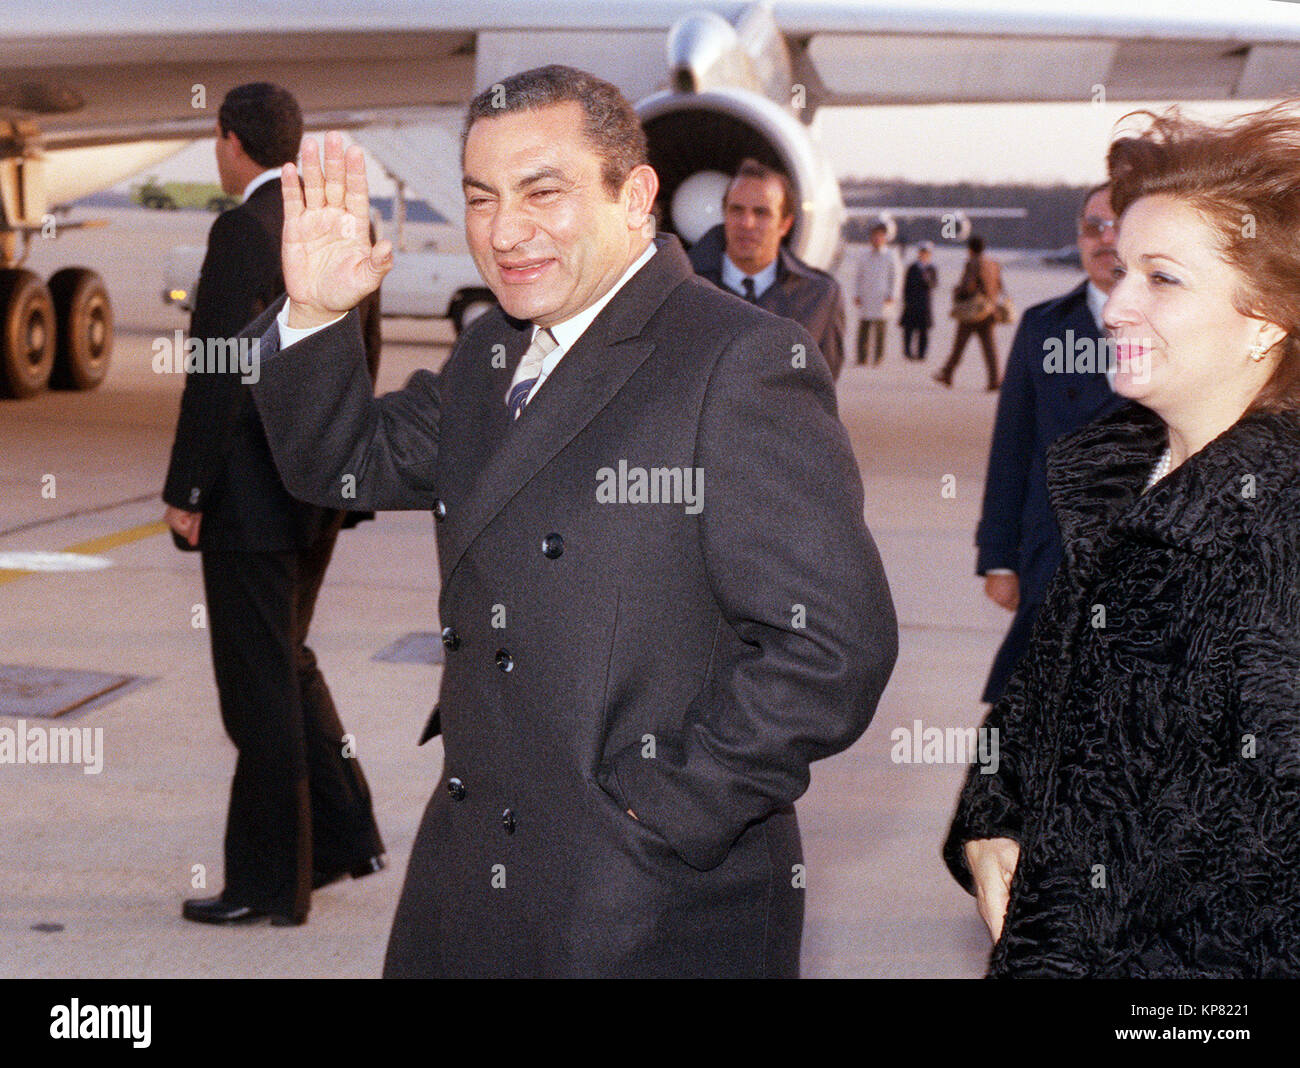 Egyptian President Hosni Mubarak waves to spectators while boarding a plane after a visit to Washington D.C. Stock Photo